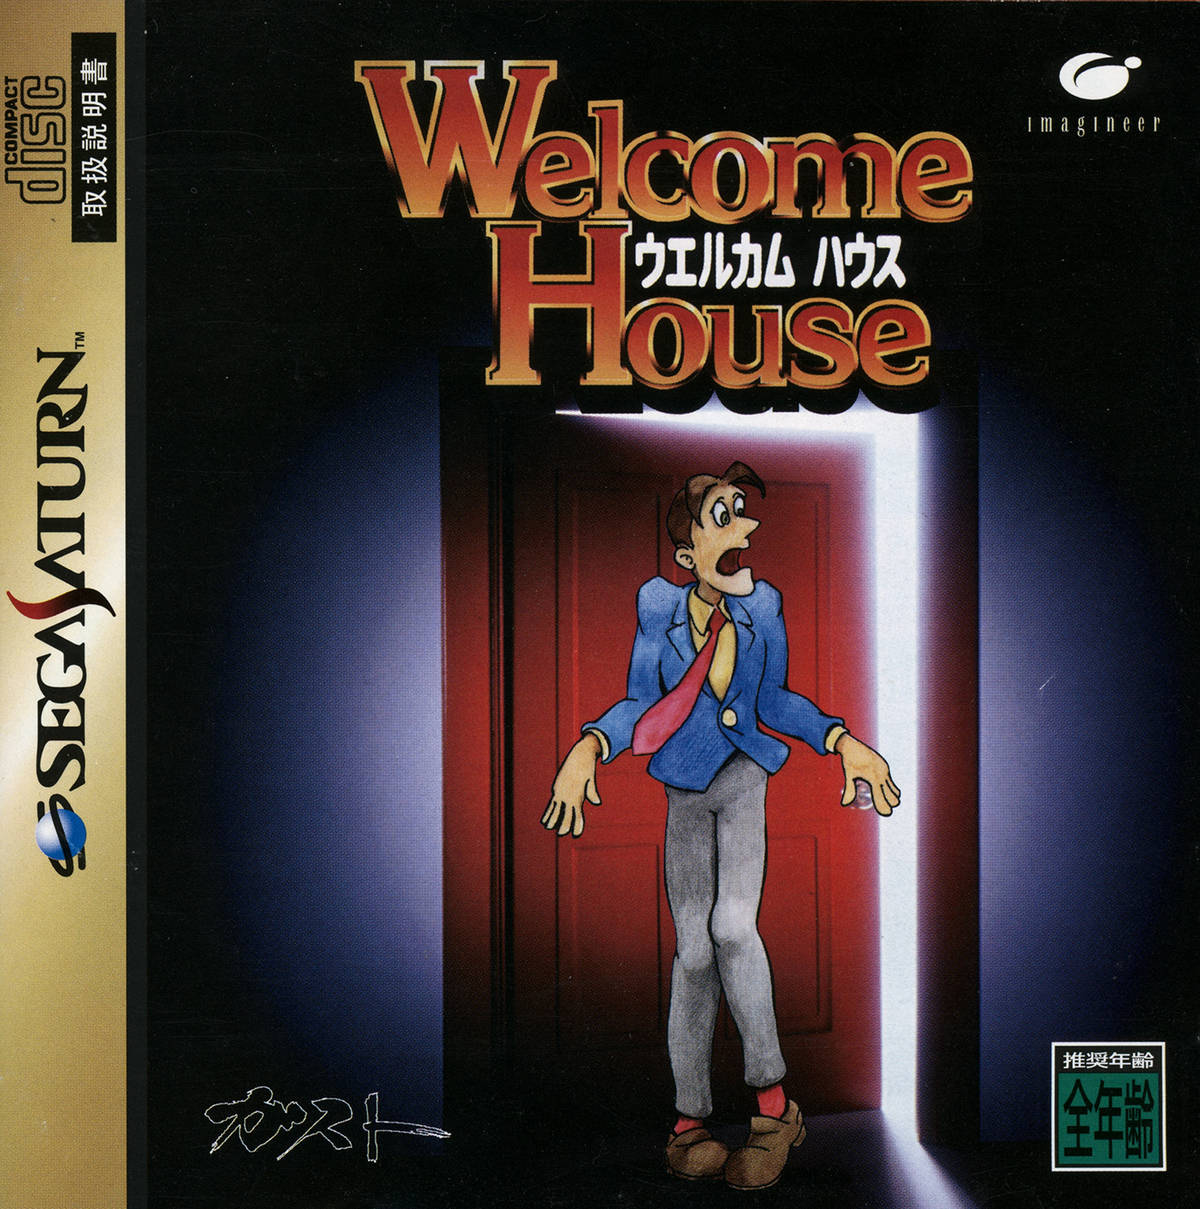 Capa do jogo Welcome House